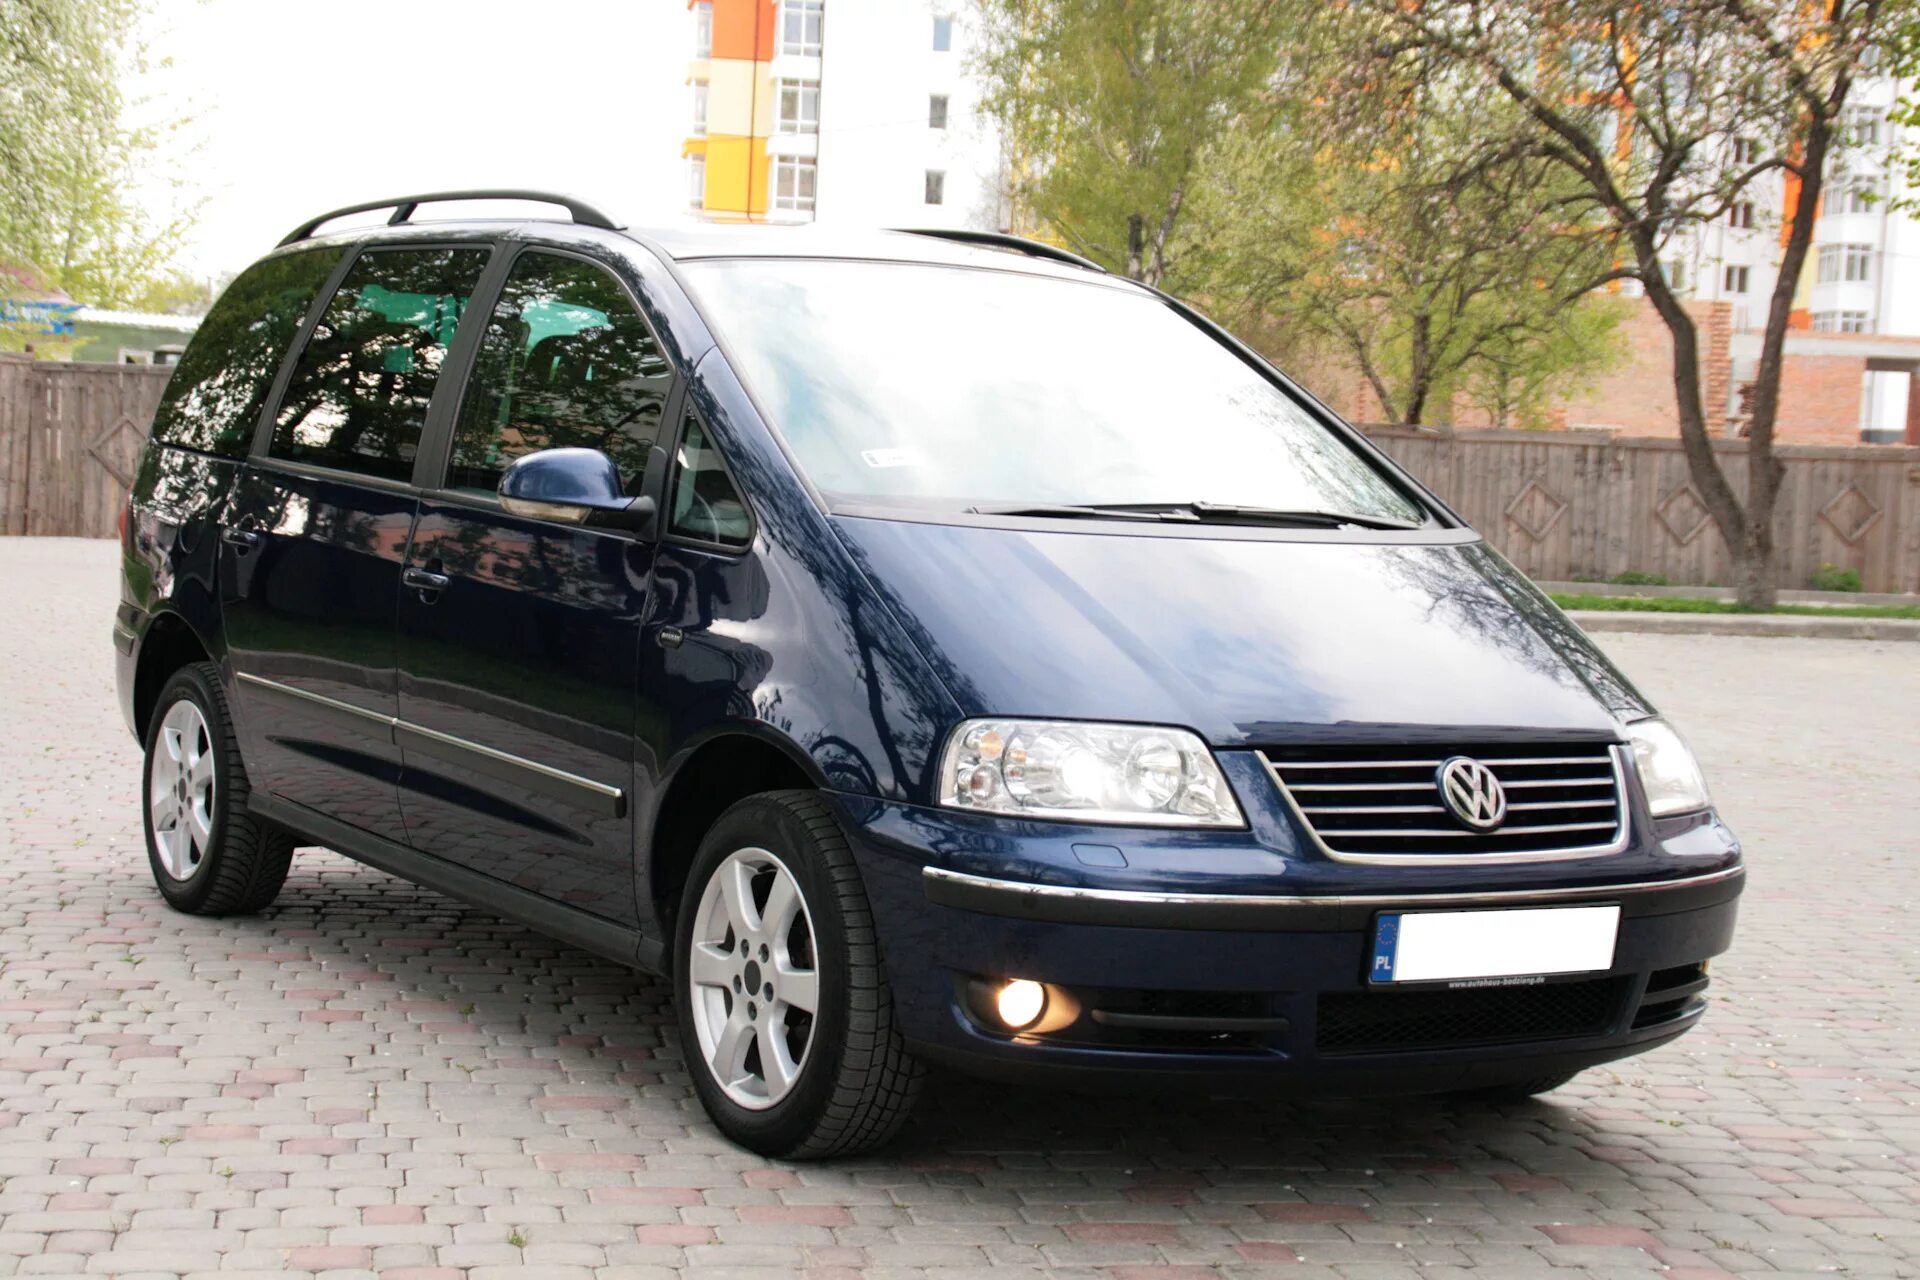 Volkswagen sharan 1.9. Фольксваген Шаран 2002г. Volkswagen Sharan 1.9 TDI. Фольксваген Шаран 2002 года 1.9 дизель. VW Sharan 1.9 TDI 1999.